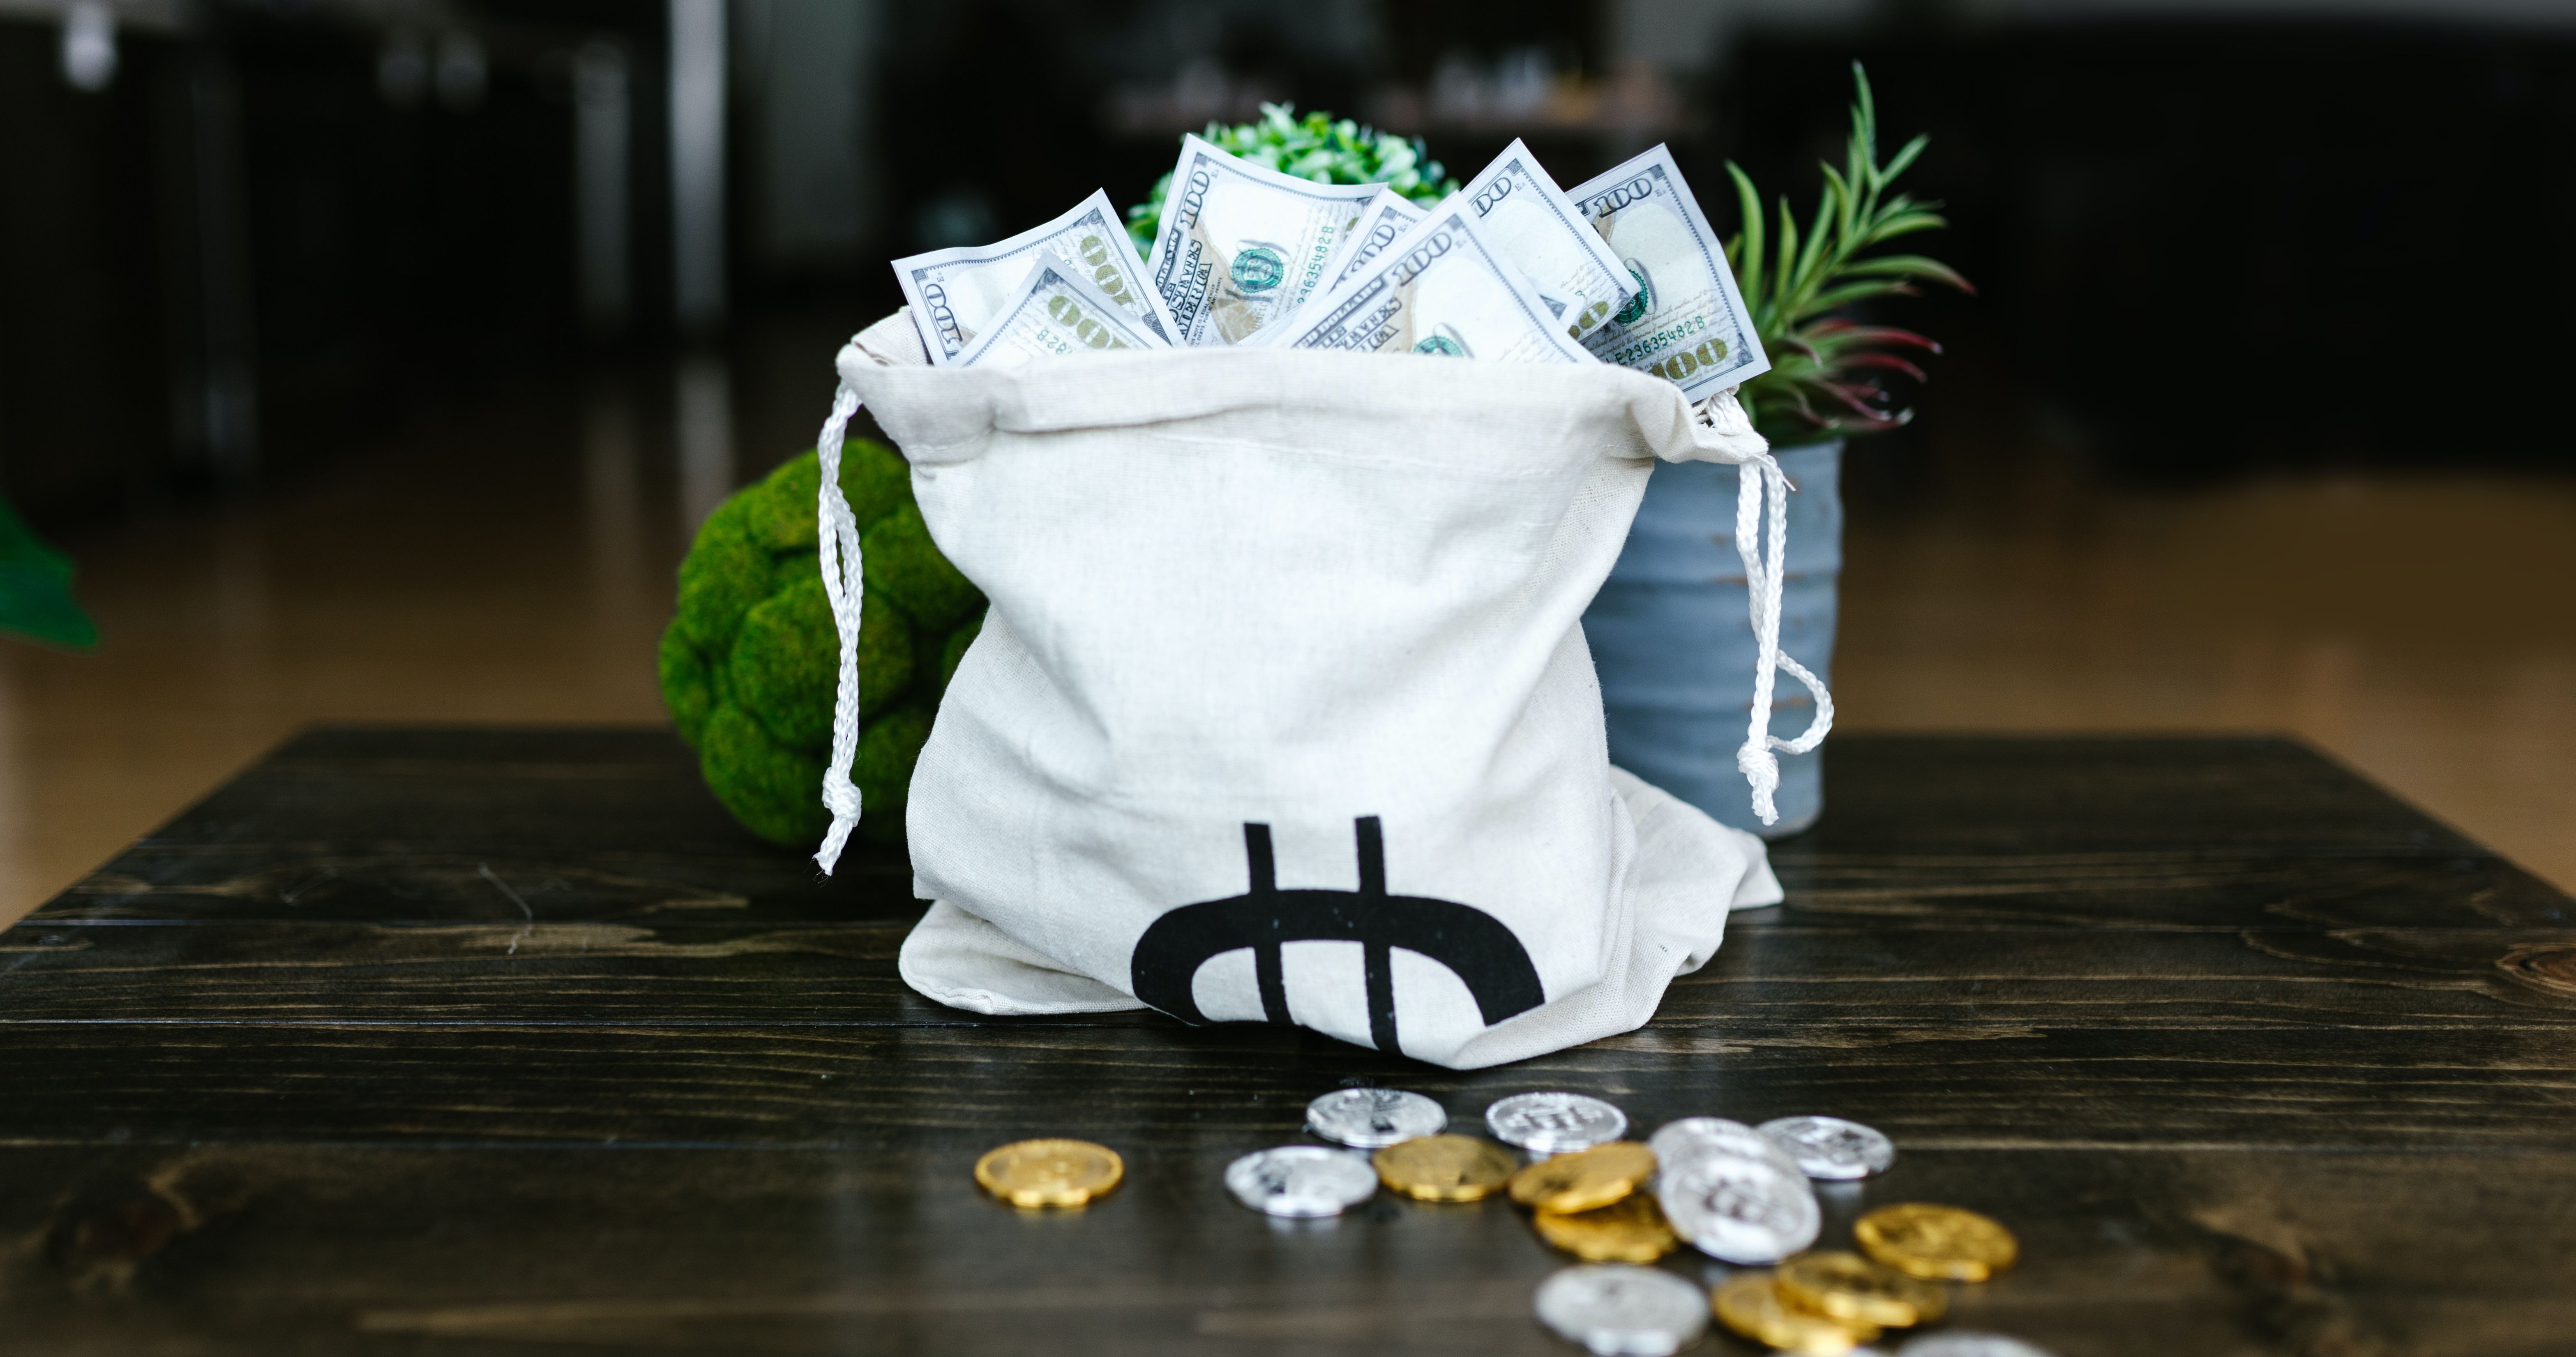 crypto coins next to bag of money